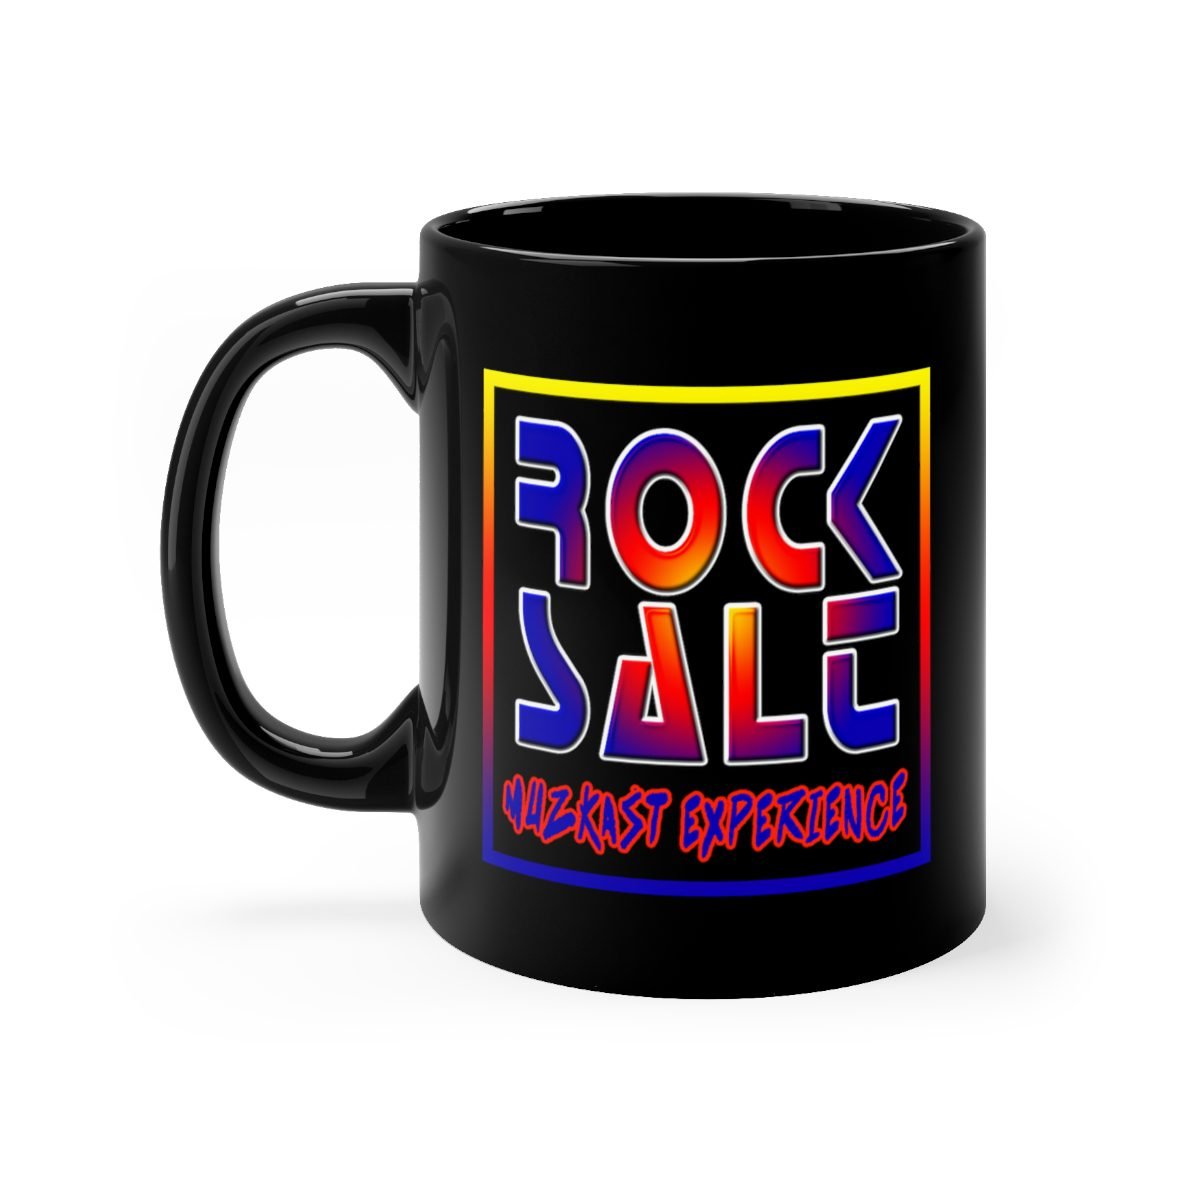 Rock Salt Muzcast Experience 11oz Black mug